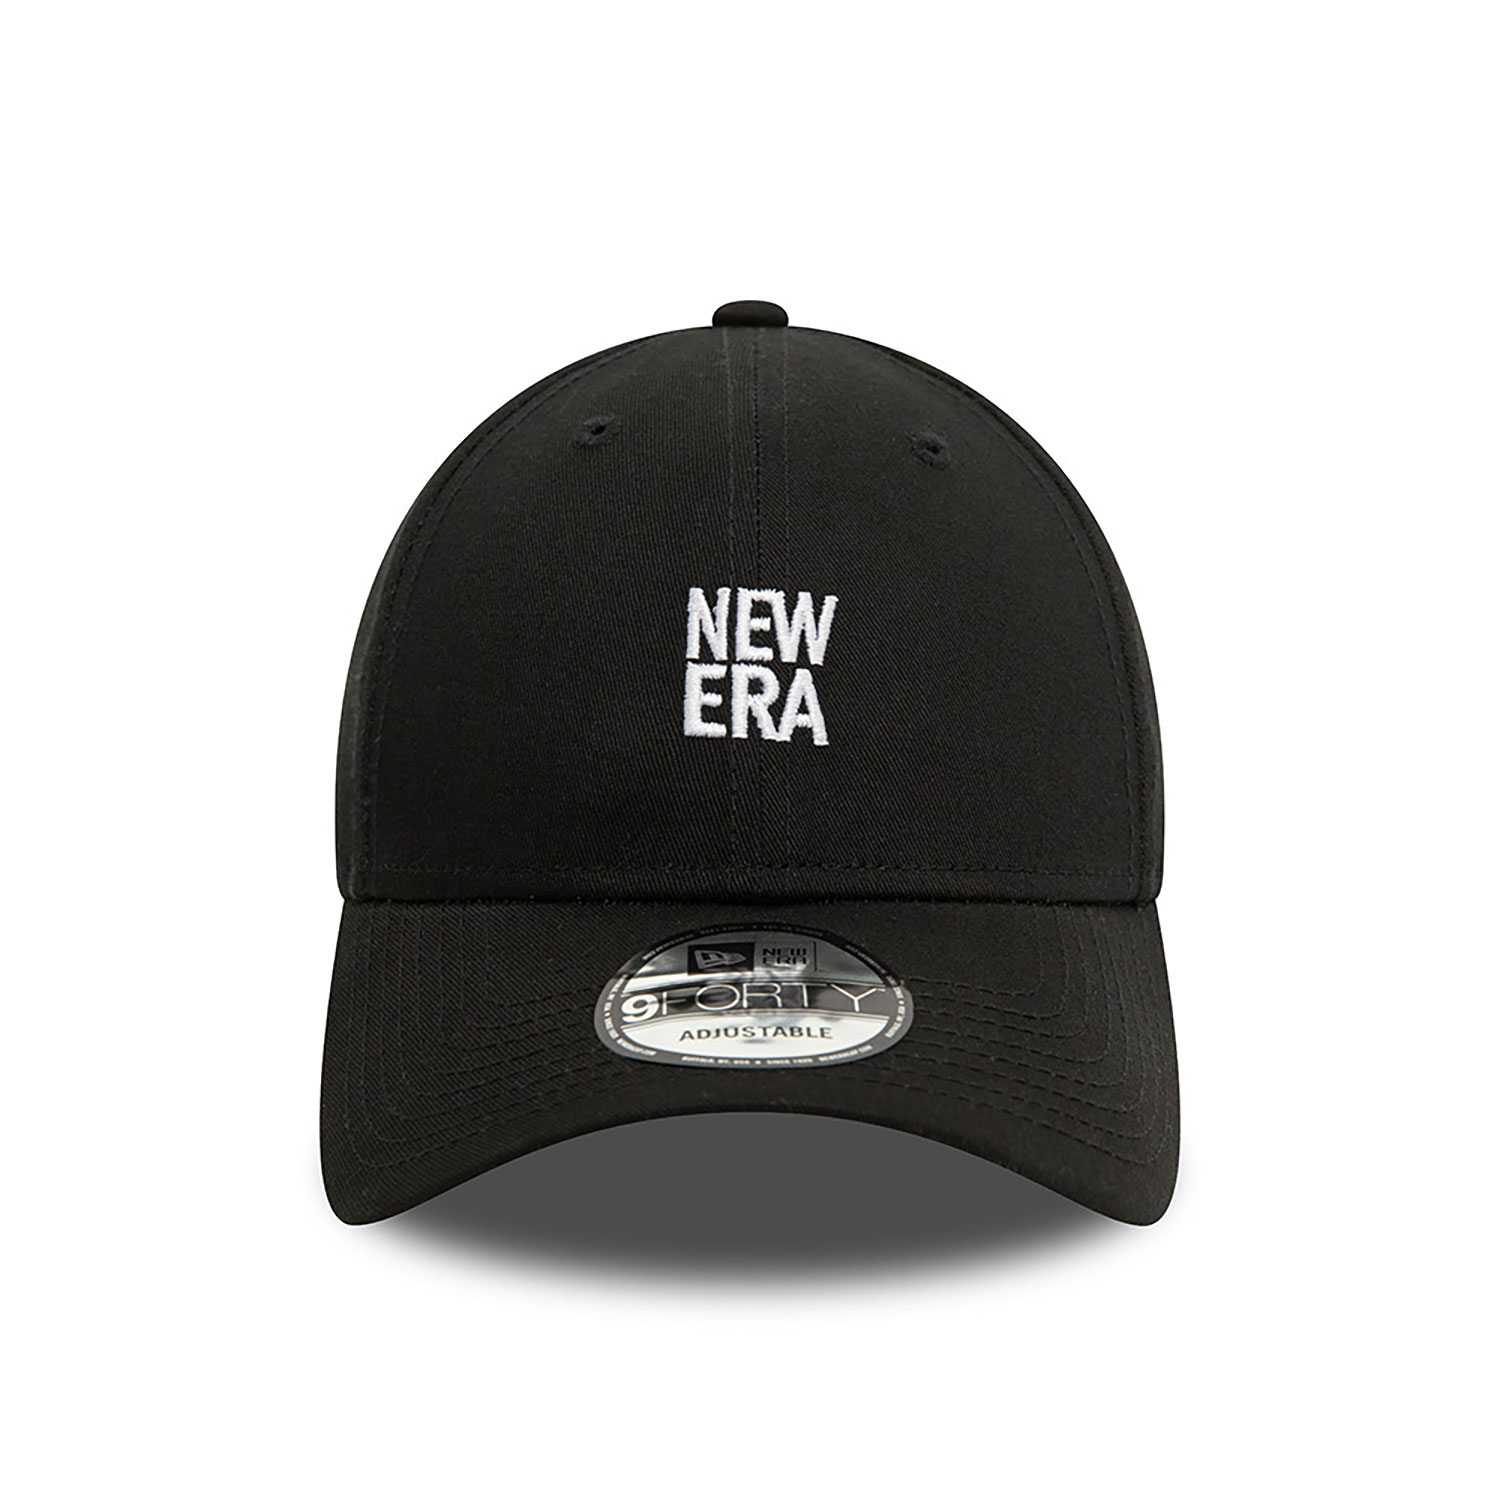 New Era Black 9FORTY Adjustable Cap